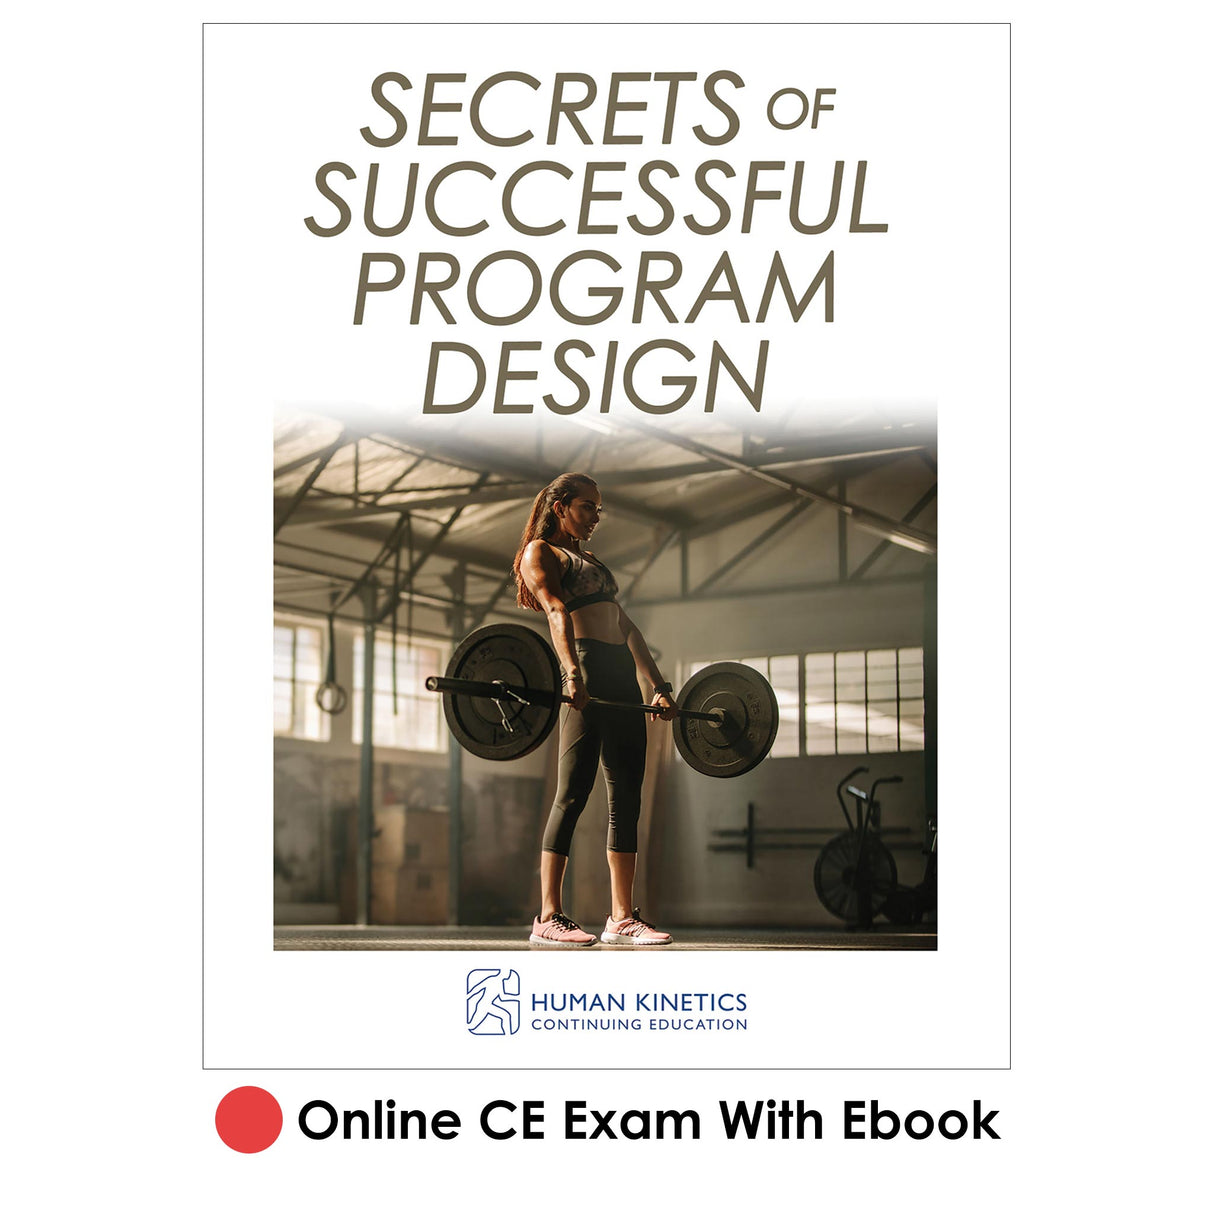 Secrets of Successful Program Design Online CE Exam With Ebook